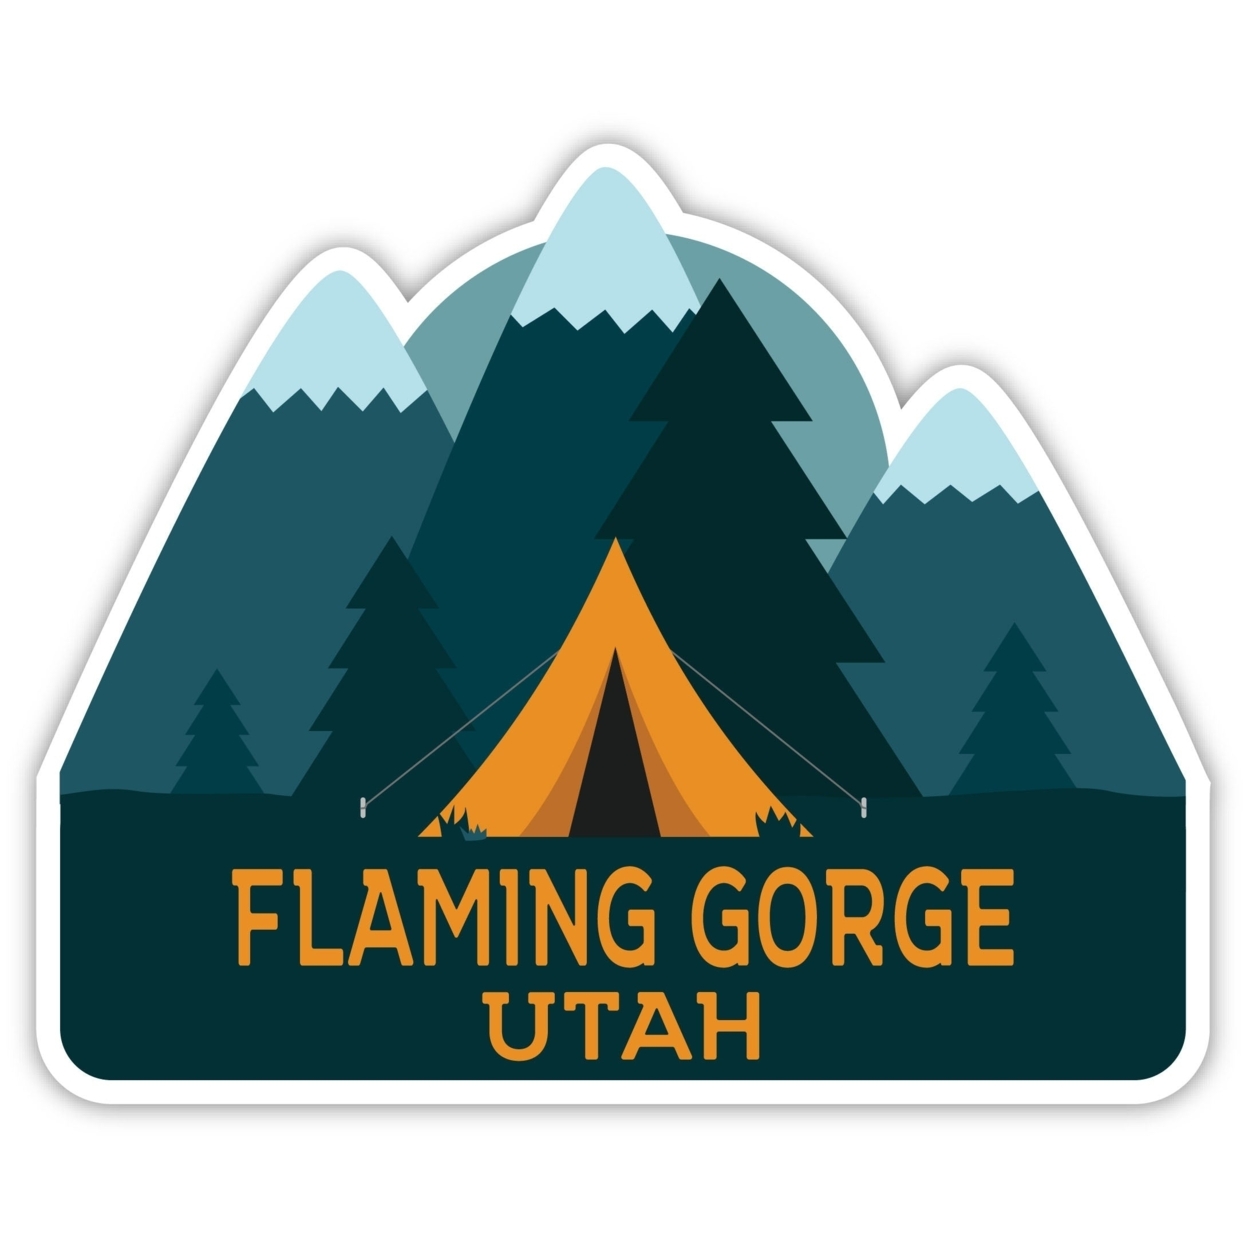 Flaming Gorge Utah Souvenir Decorative Stickers (Choose Theme And Size) - Single Unit, 12-Inch, Adventures Awaits